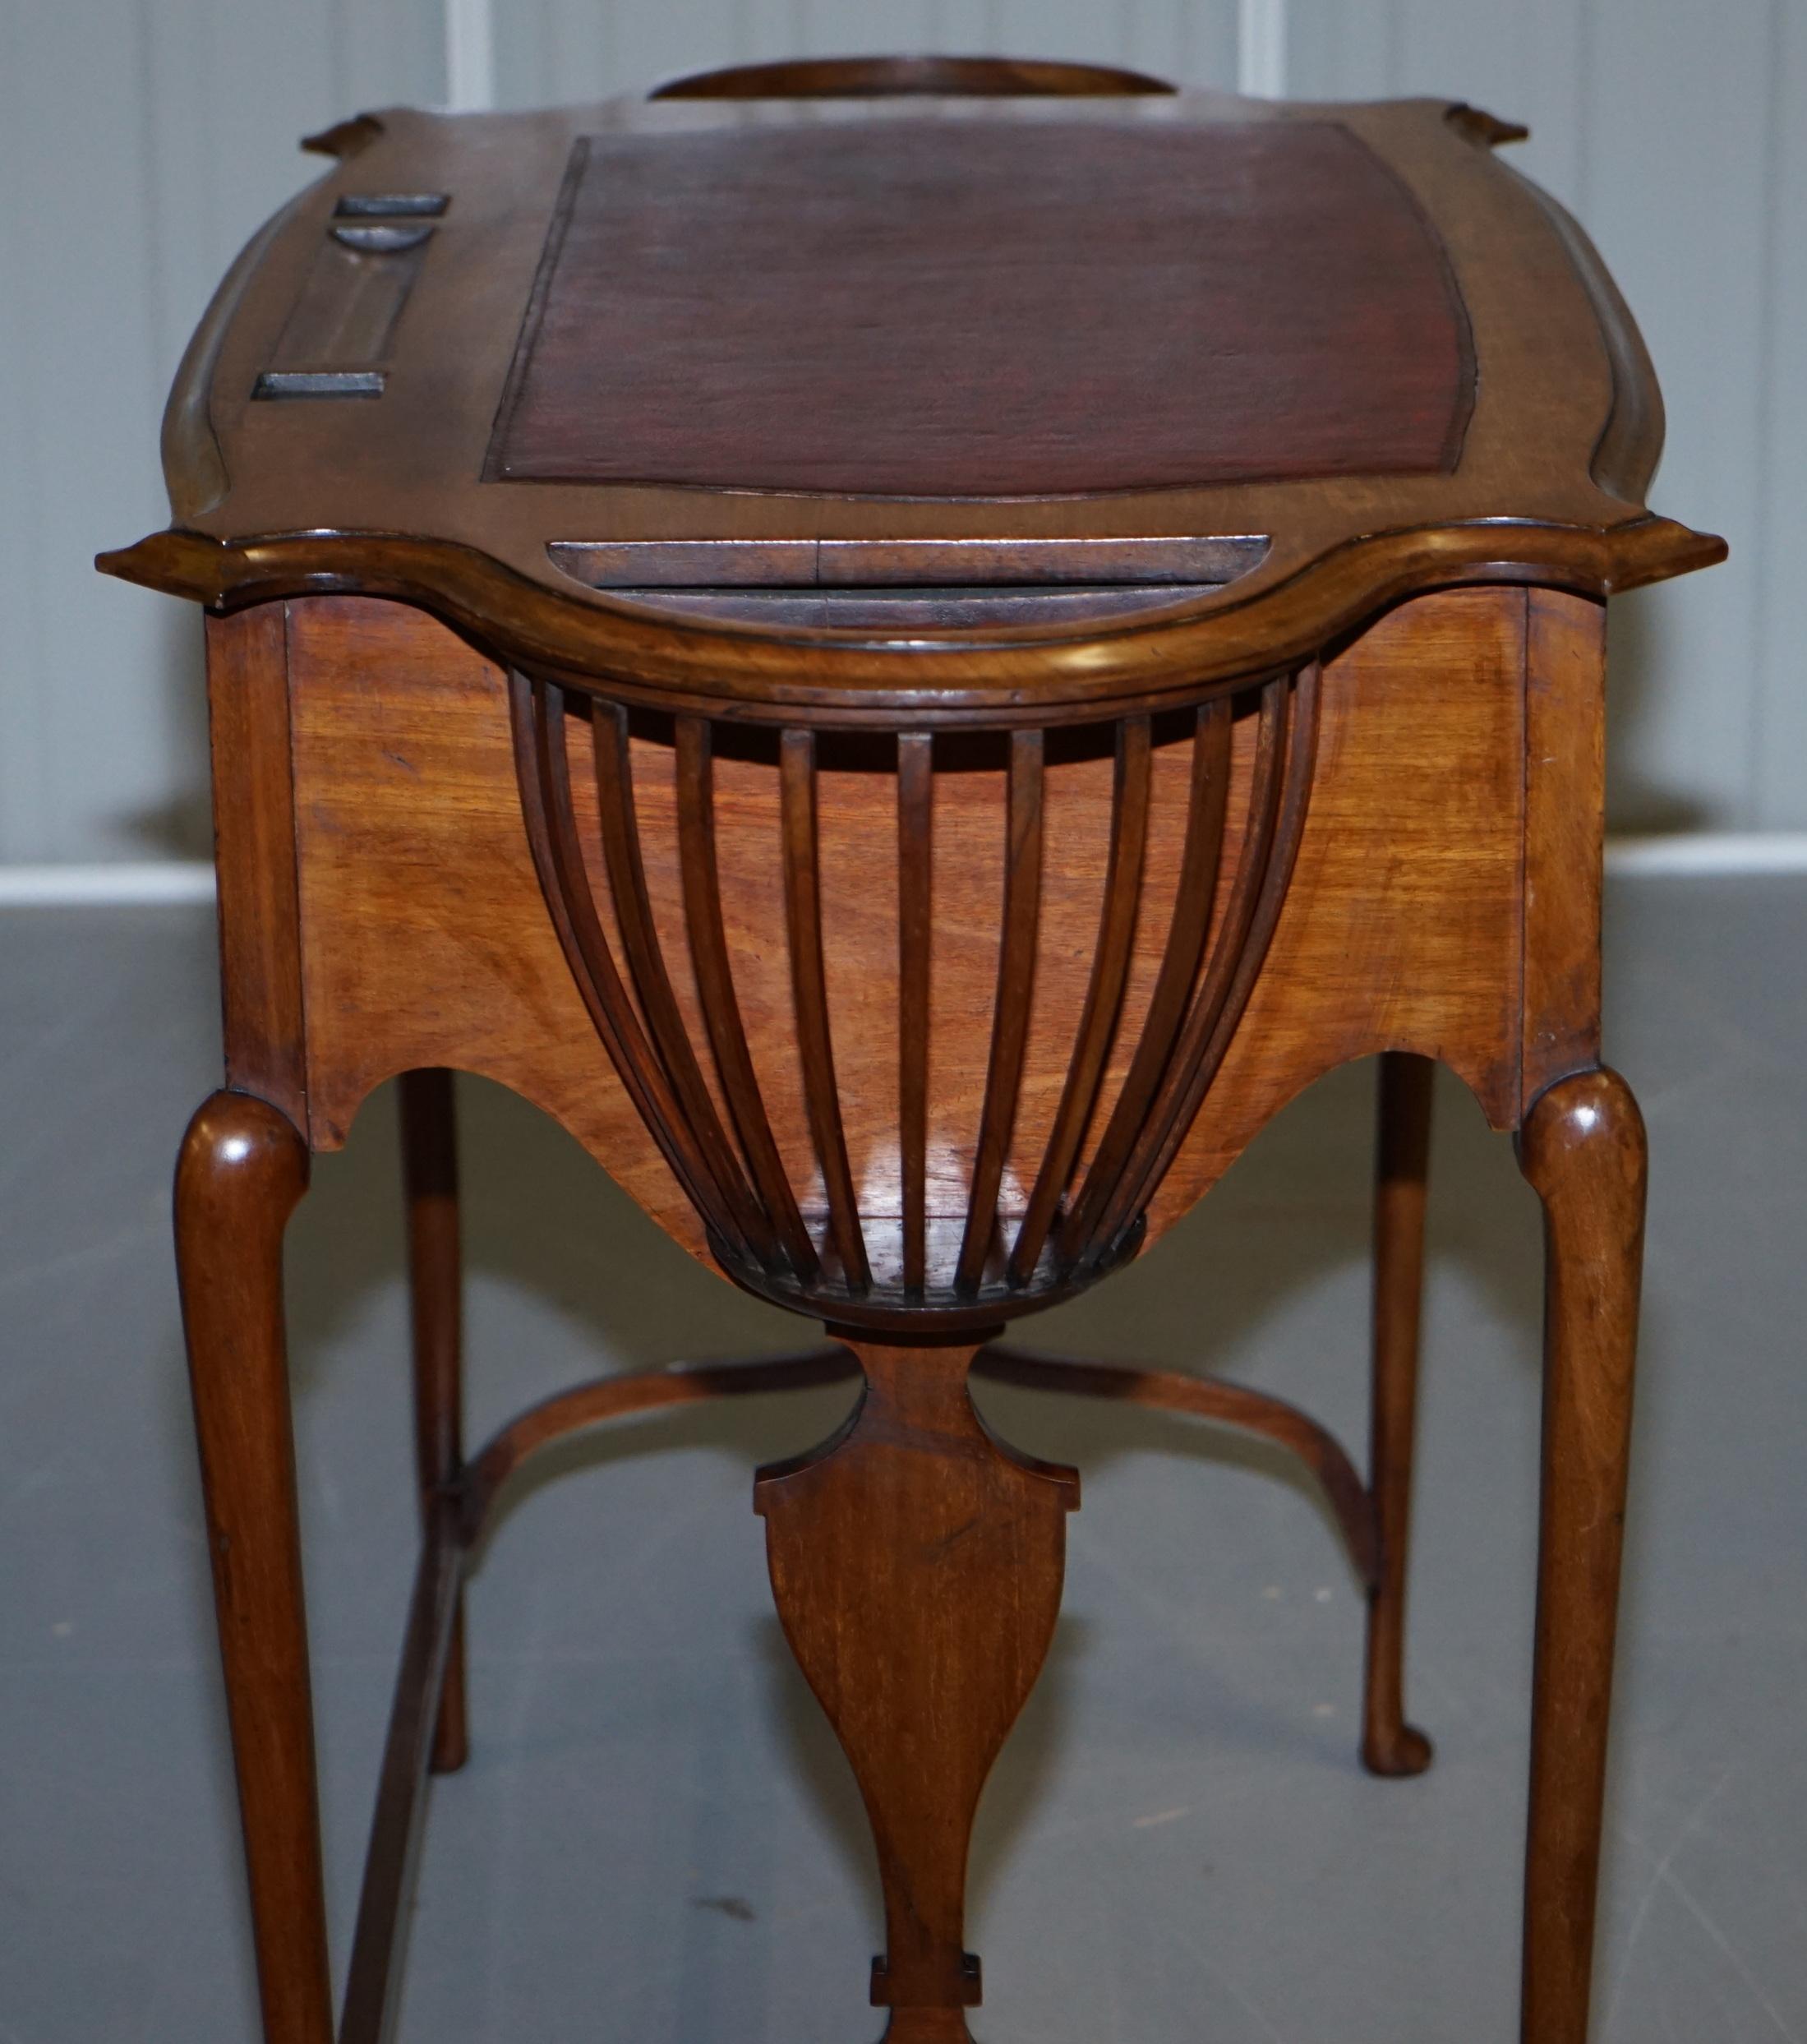 Rare Victorian circa 1860 Small Mahogany Desk Built in Jardinières for Plants 6